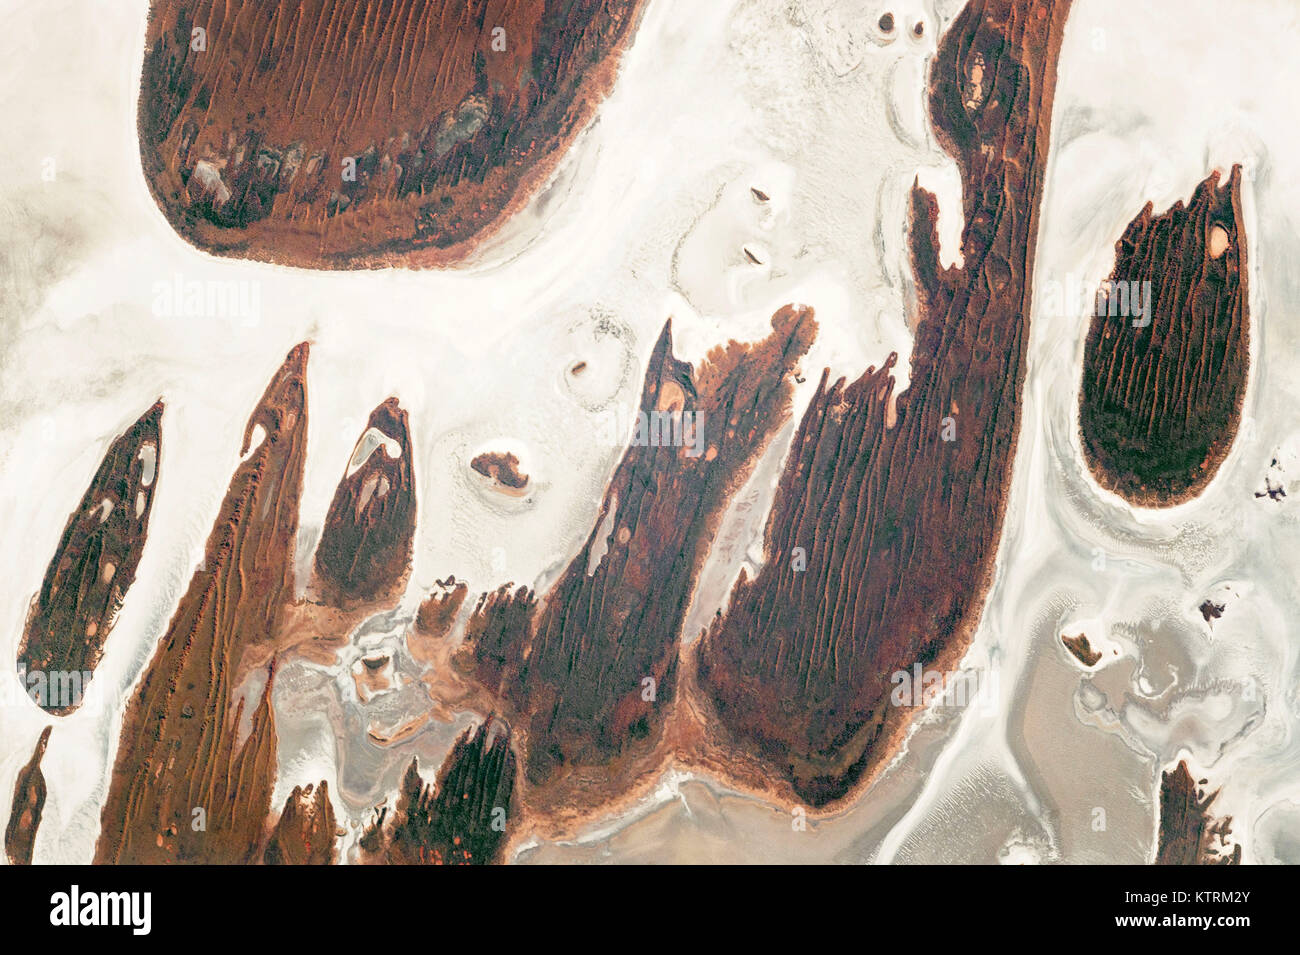 Lake Hazlett and Lake Willis in Western Australia's Great Sandy Desert Stock Photo